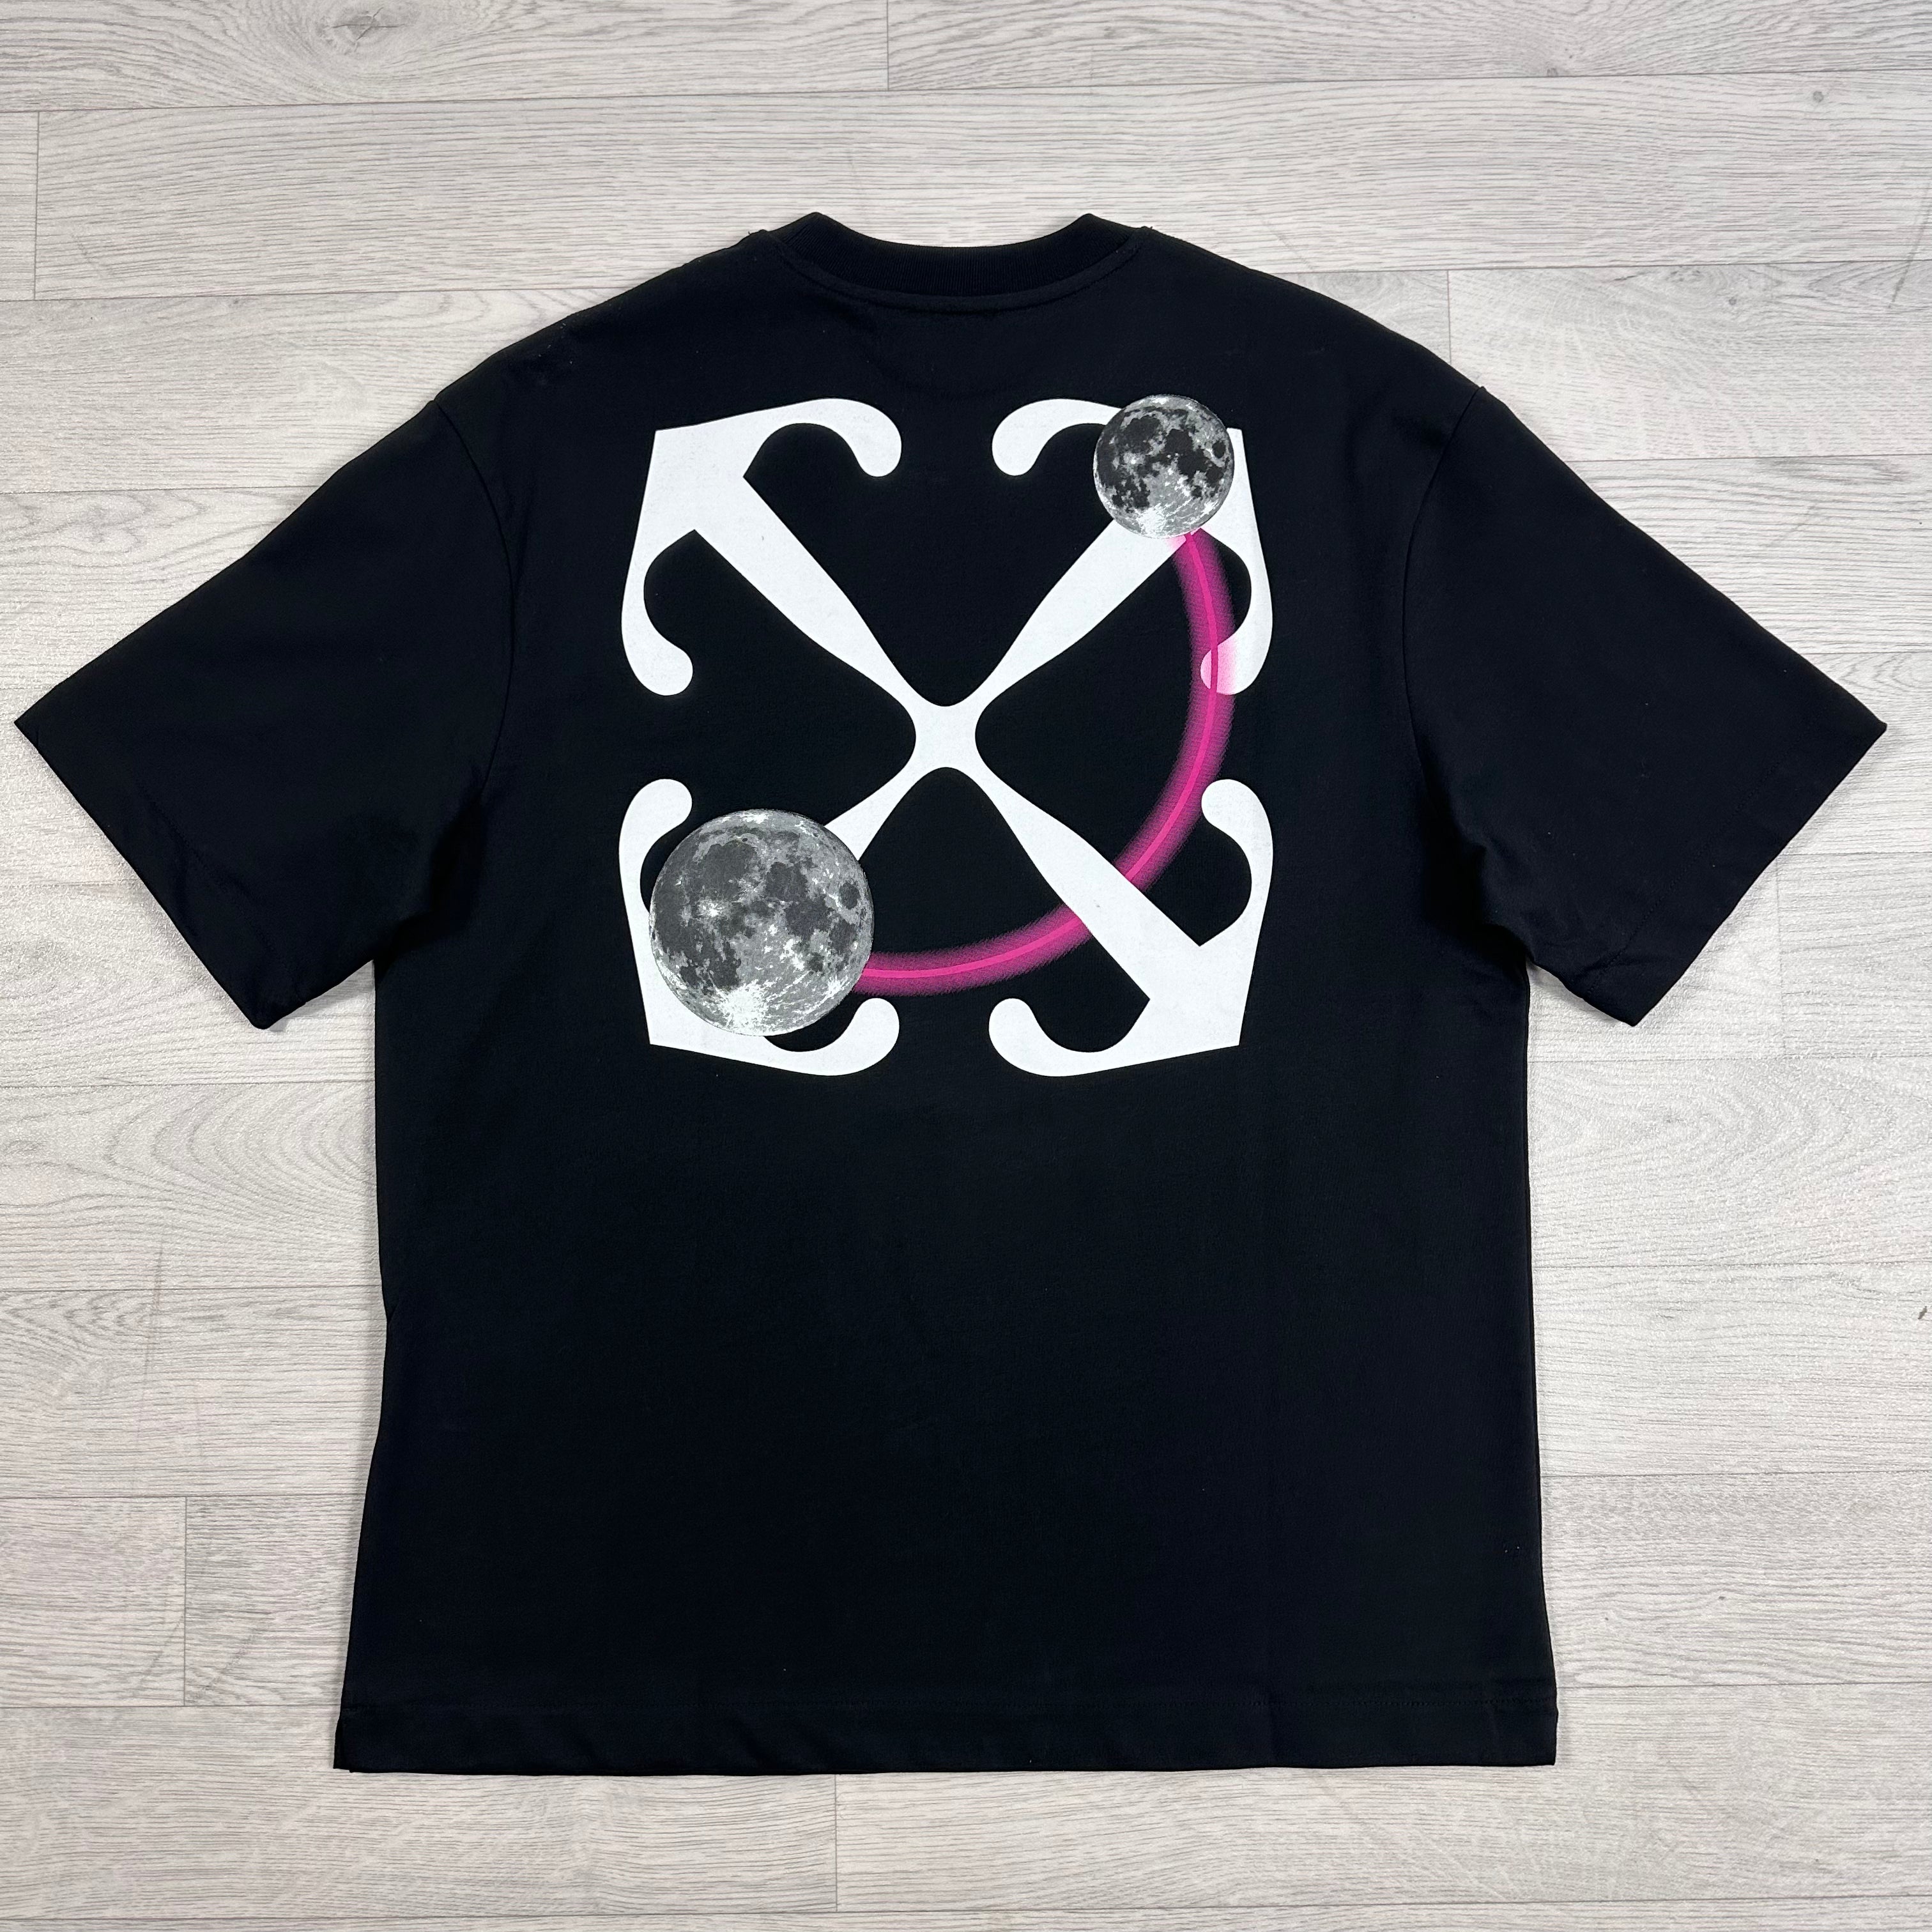 Moon Arrow Skate T-shirt Black